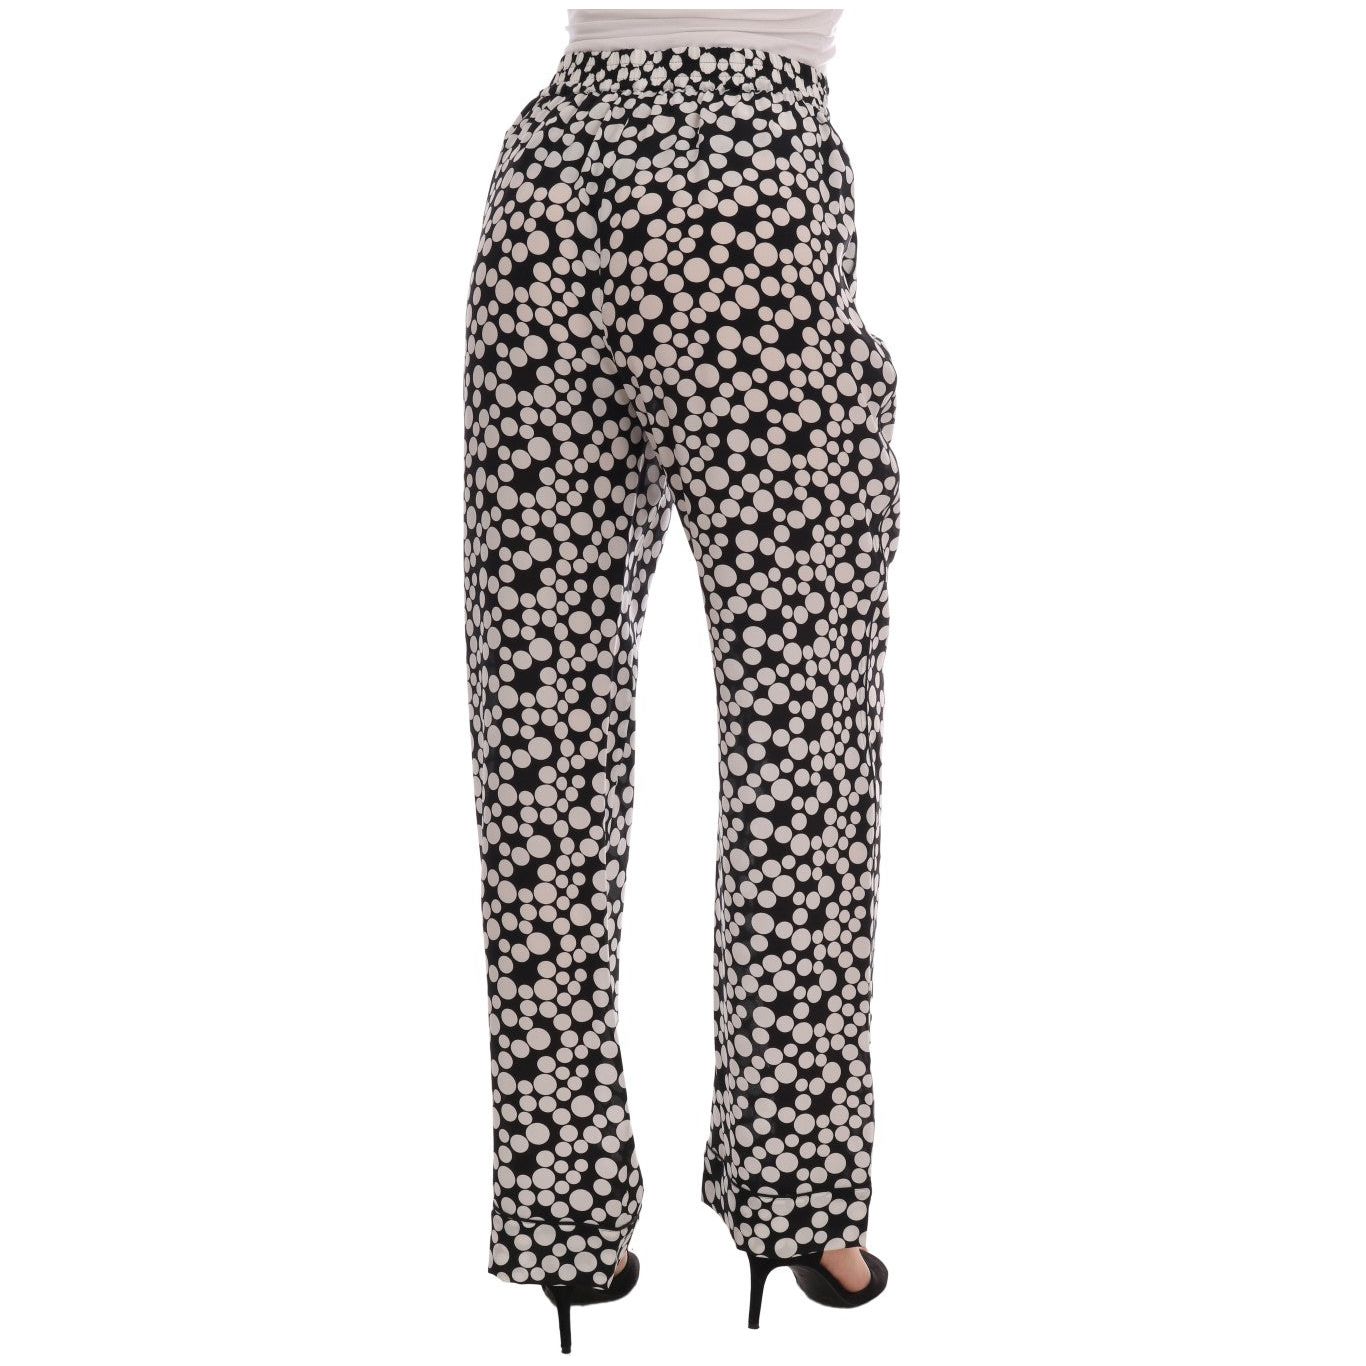 Dolce & Gabbana Elegant Polka Dot Silk High-Waist Pants Jeans & Pants black-white-polka-dottes-silk-pants 508363-black-white-polka-dottes-silk-pants-2.jpg